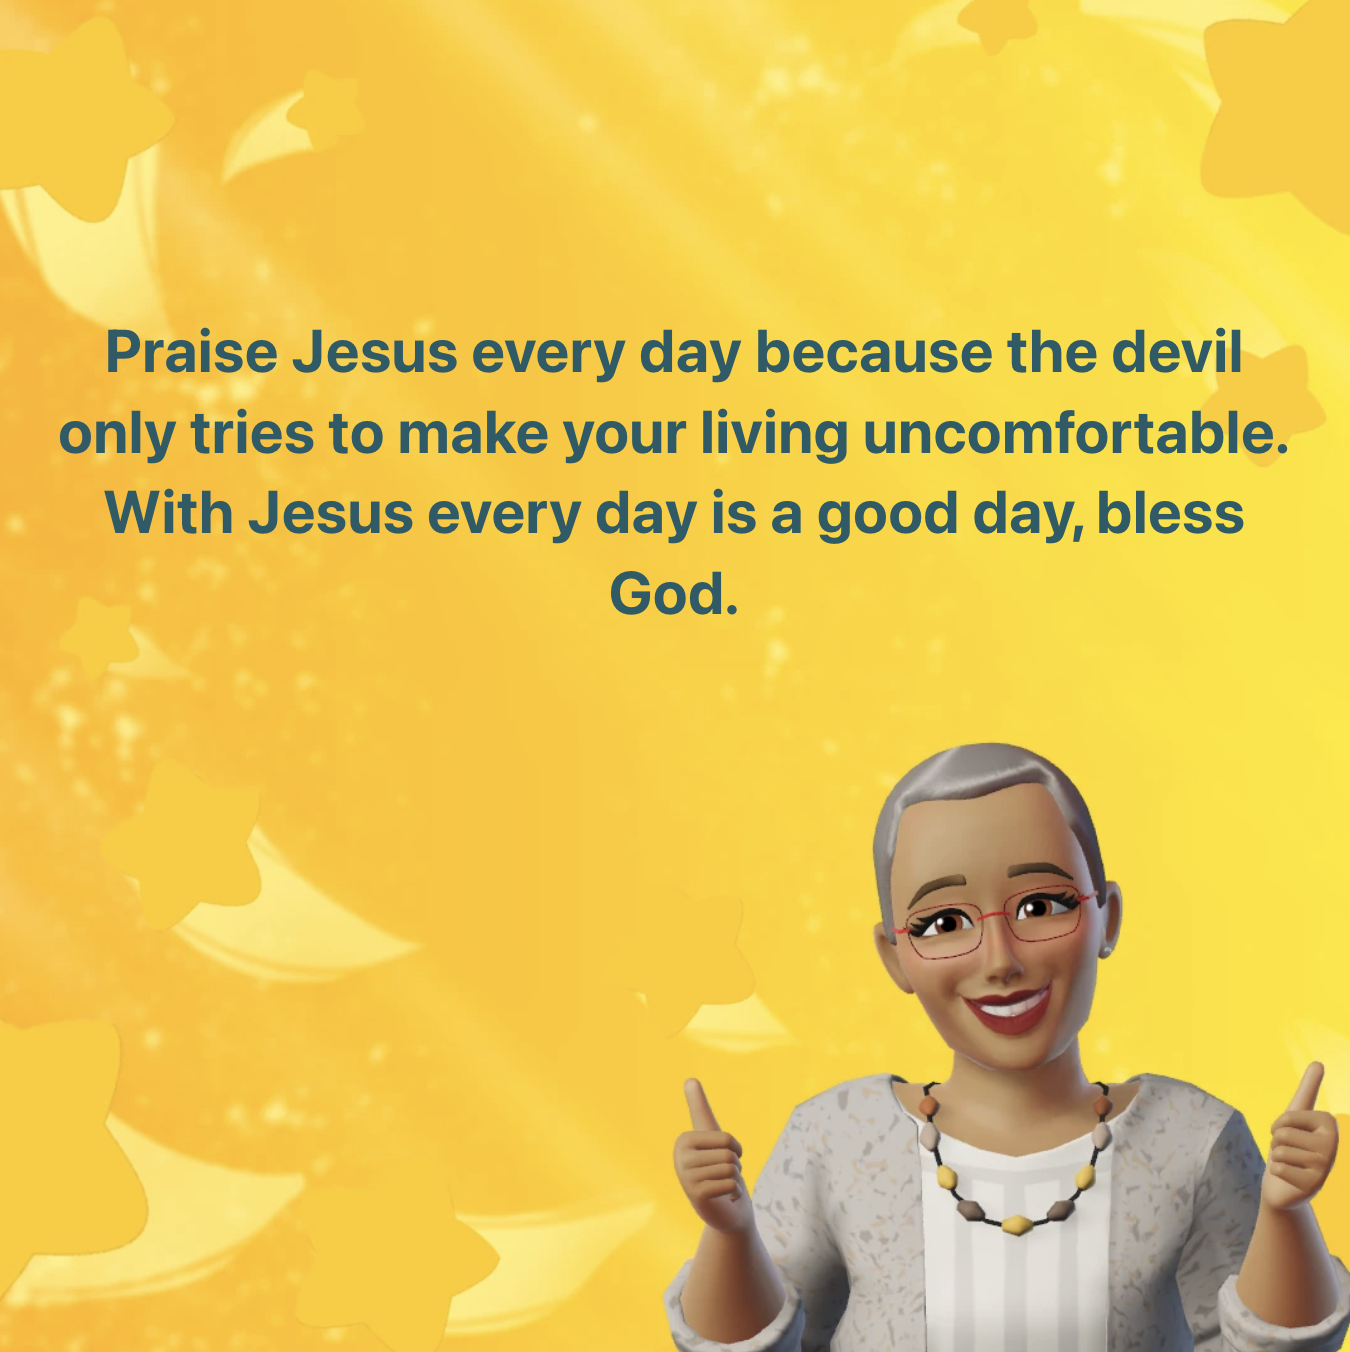 The devil wants you uncomfortable